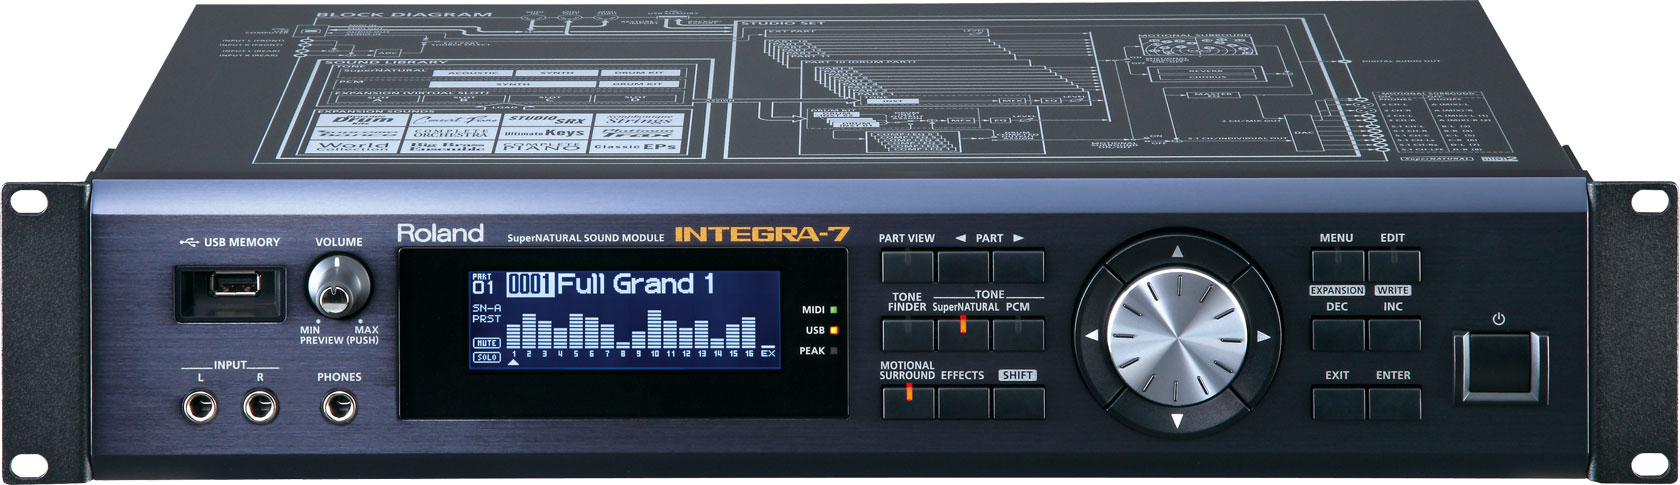 P003667_Roland INTEGRA-7 synthesizer module_Modules